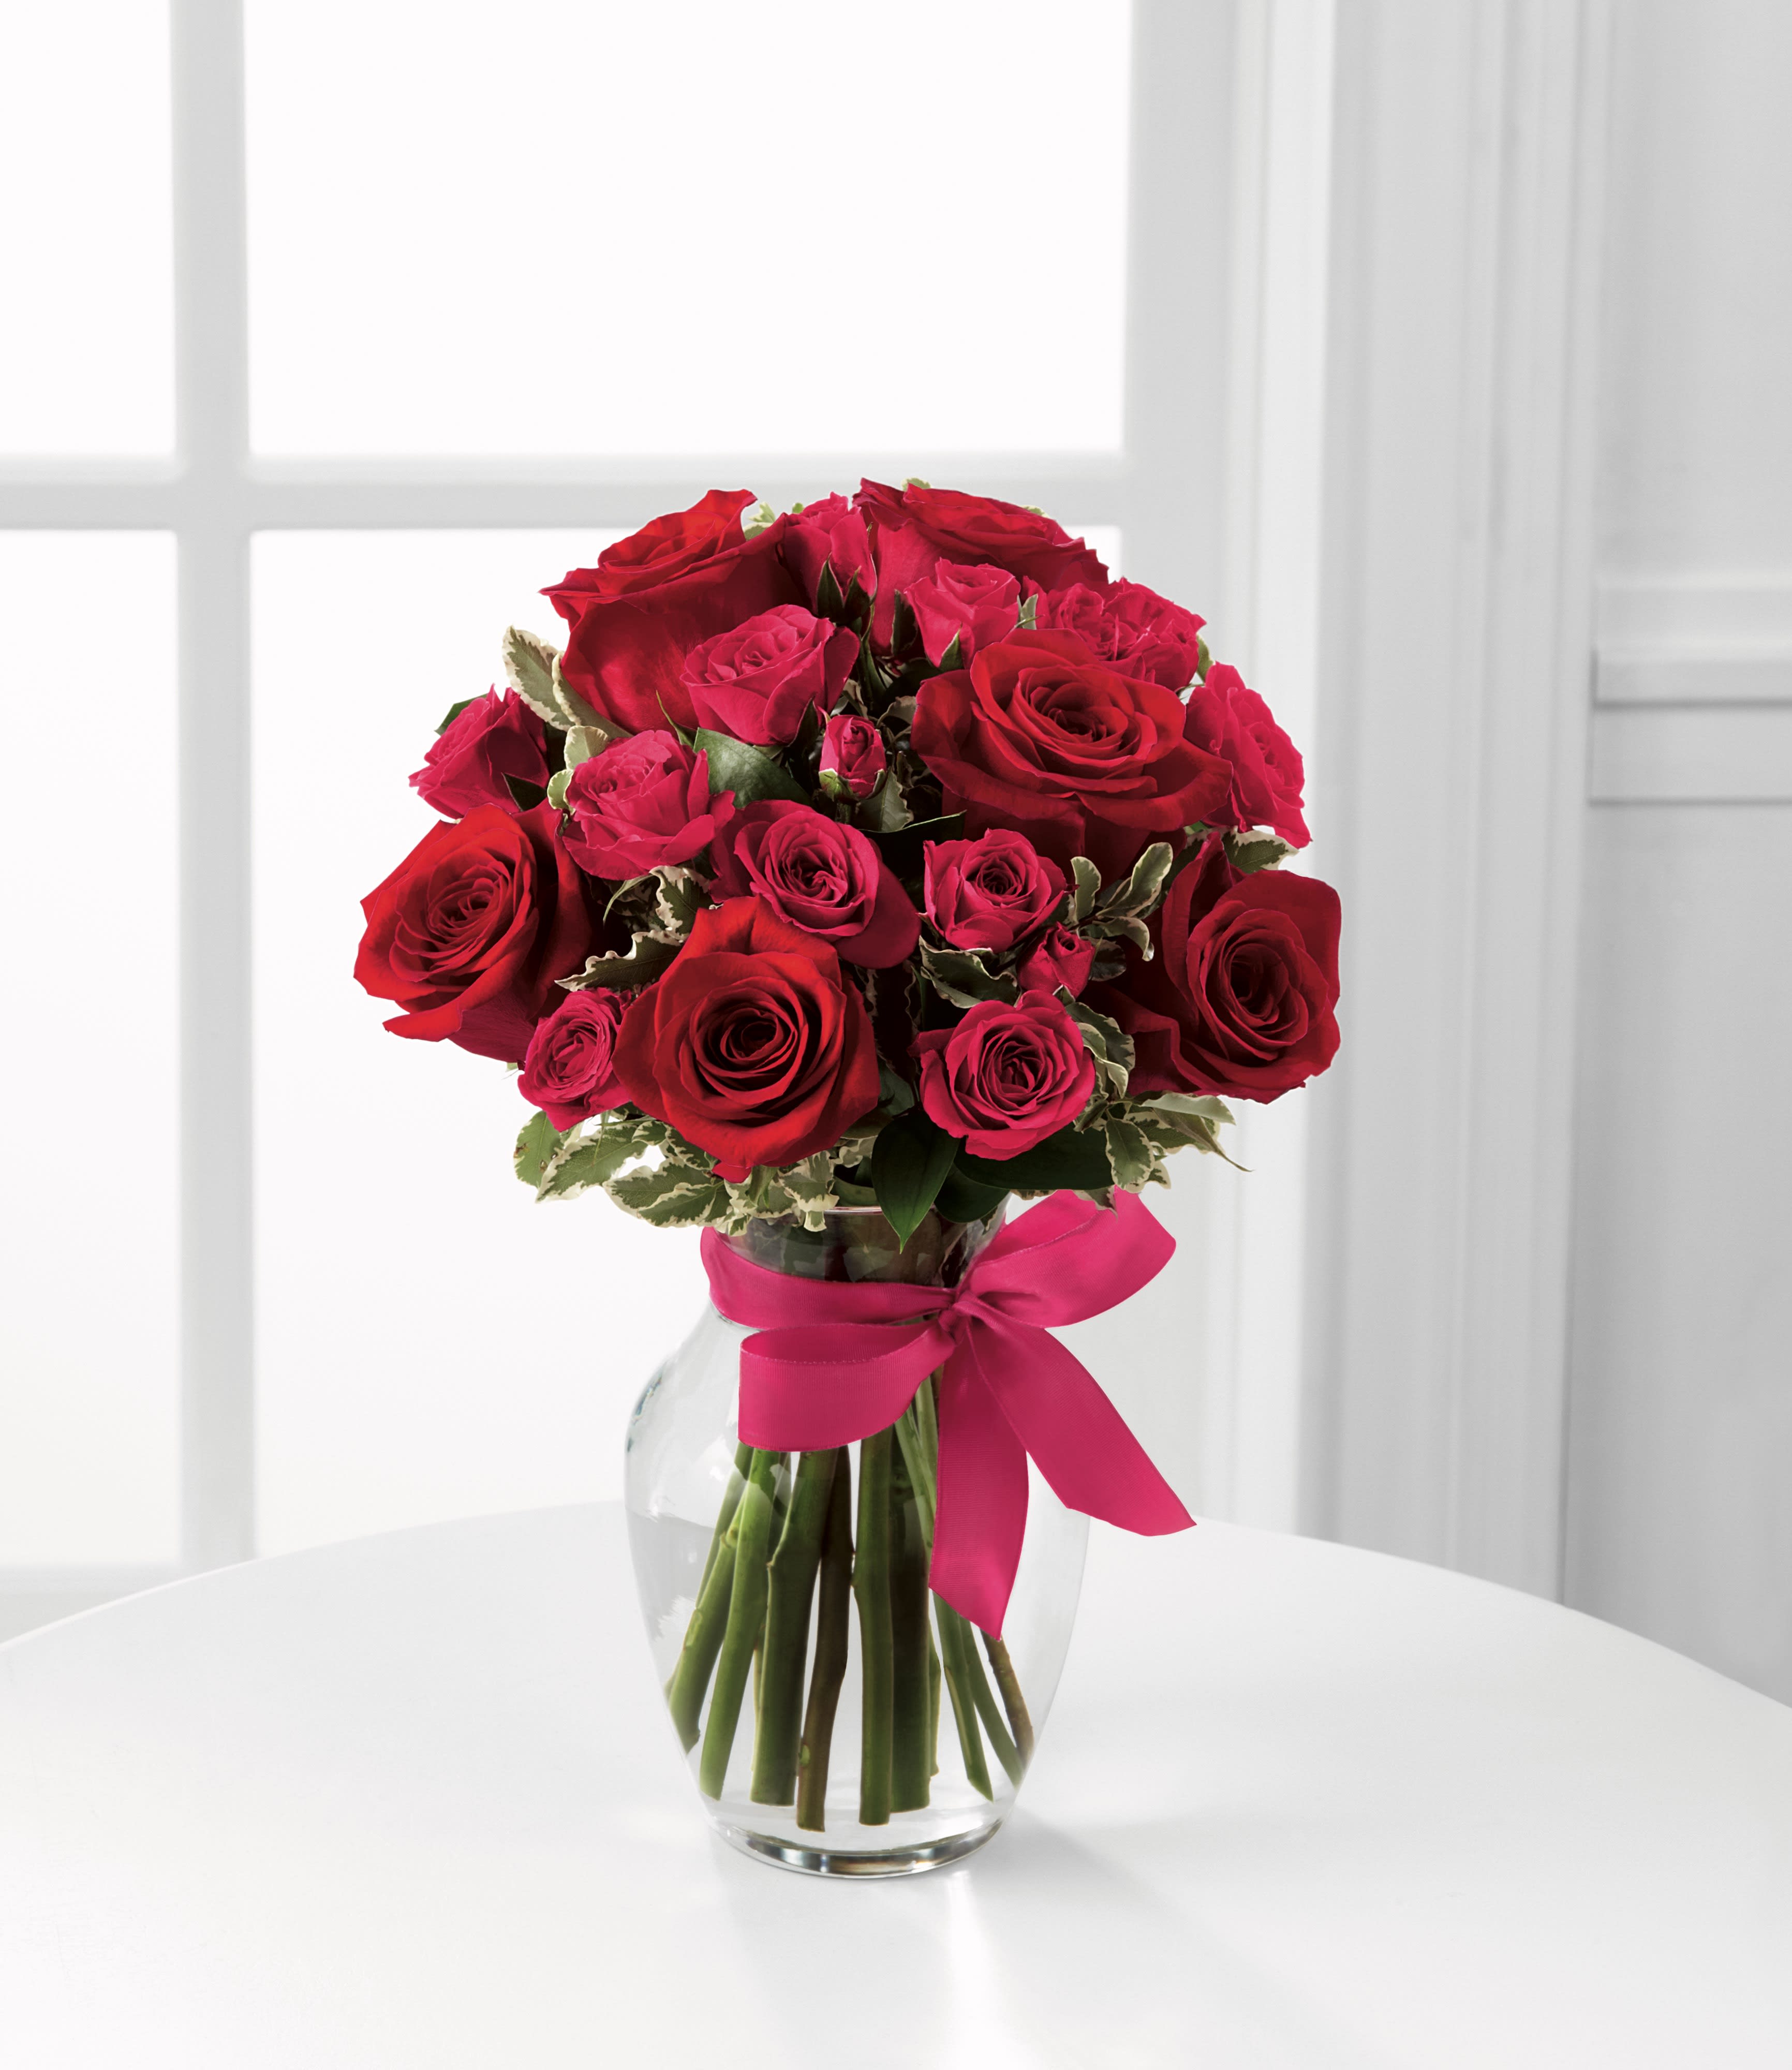 The FTD® Love-Struck™ Rose Bouquet